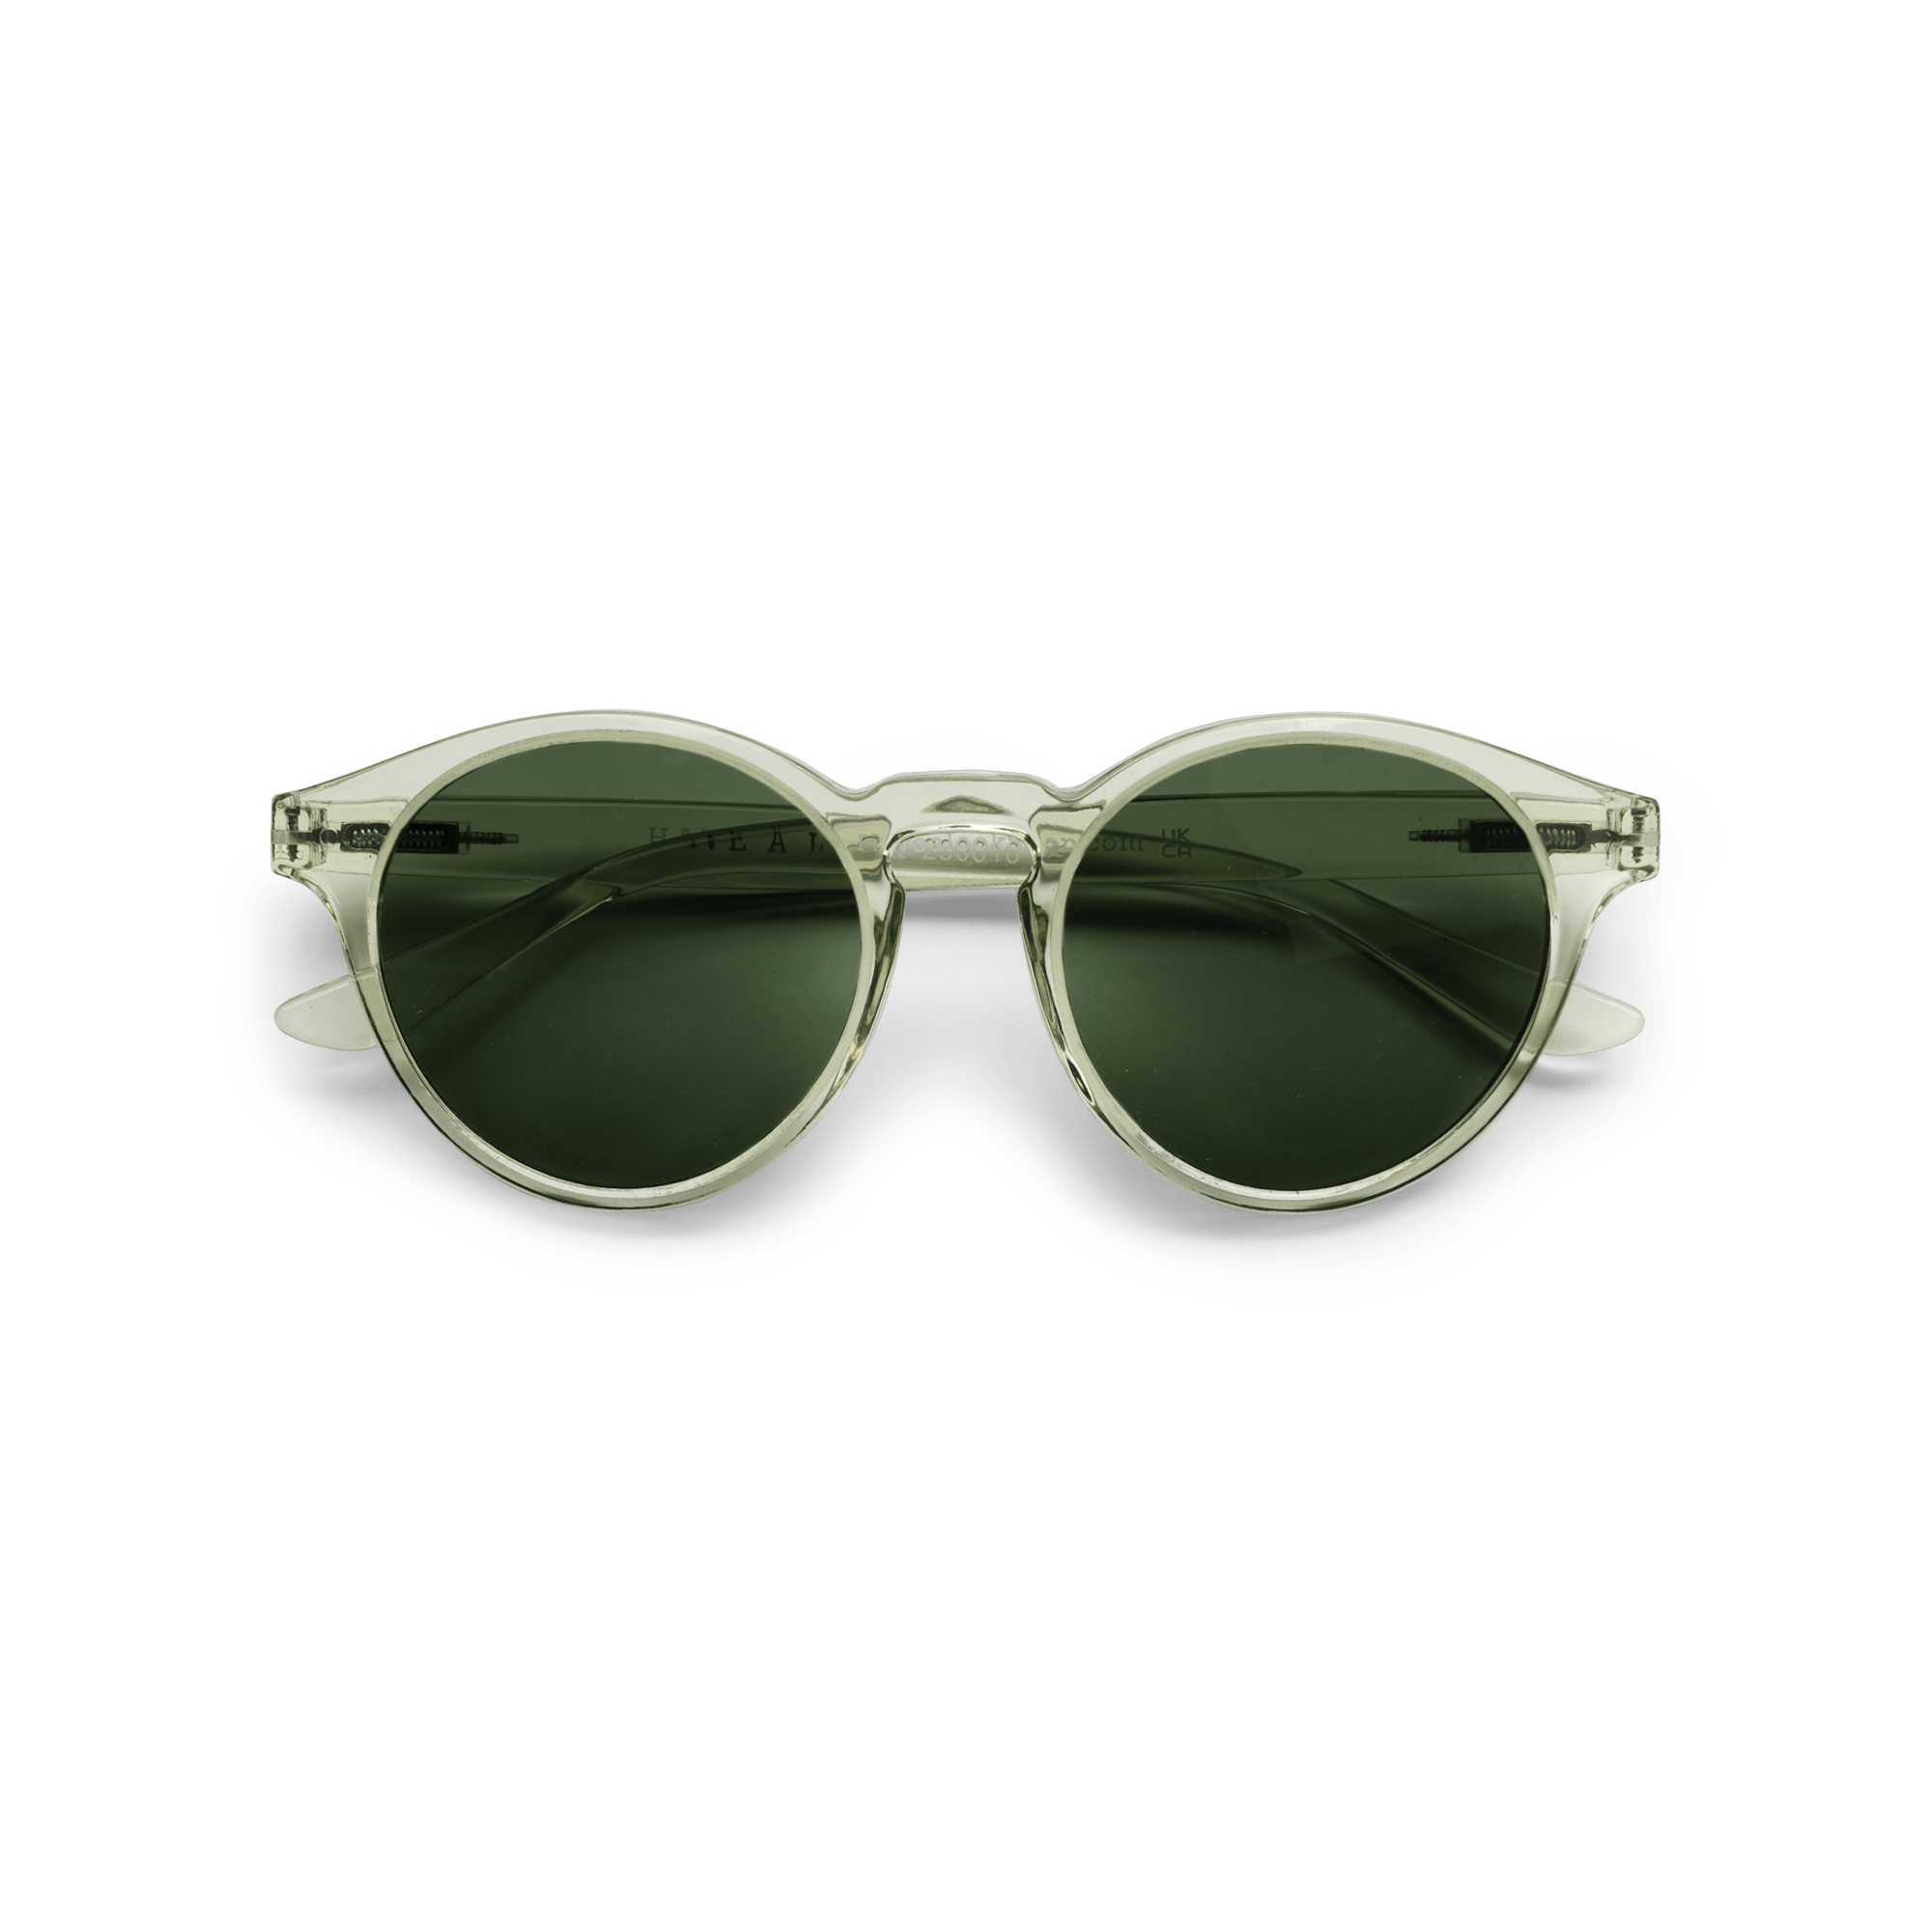 Sonnenfernbrillen Casual - clear jade aus Have A Look